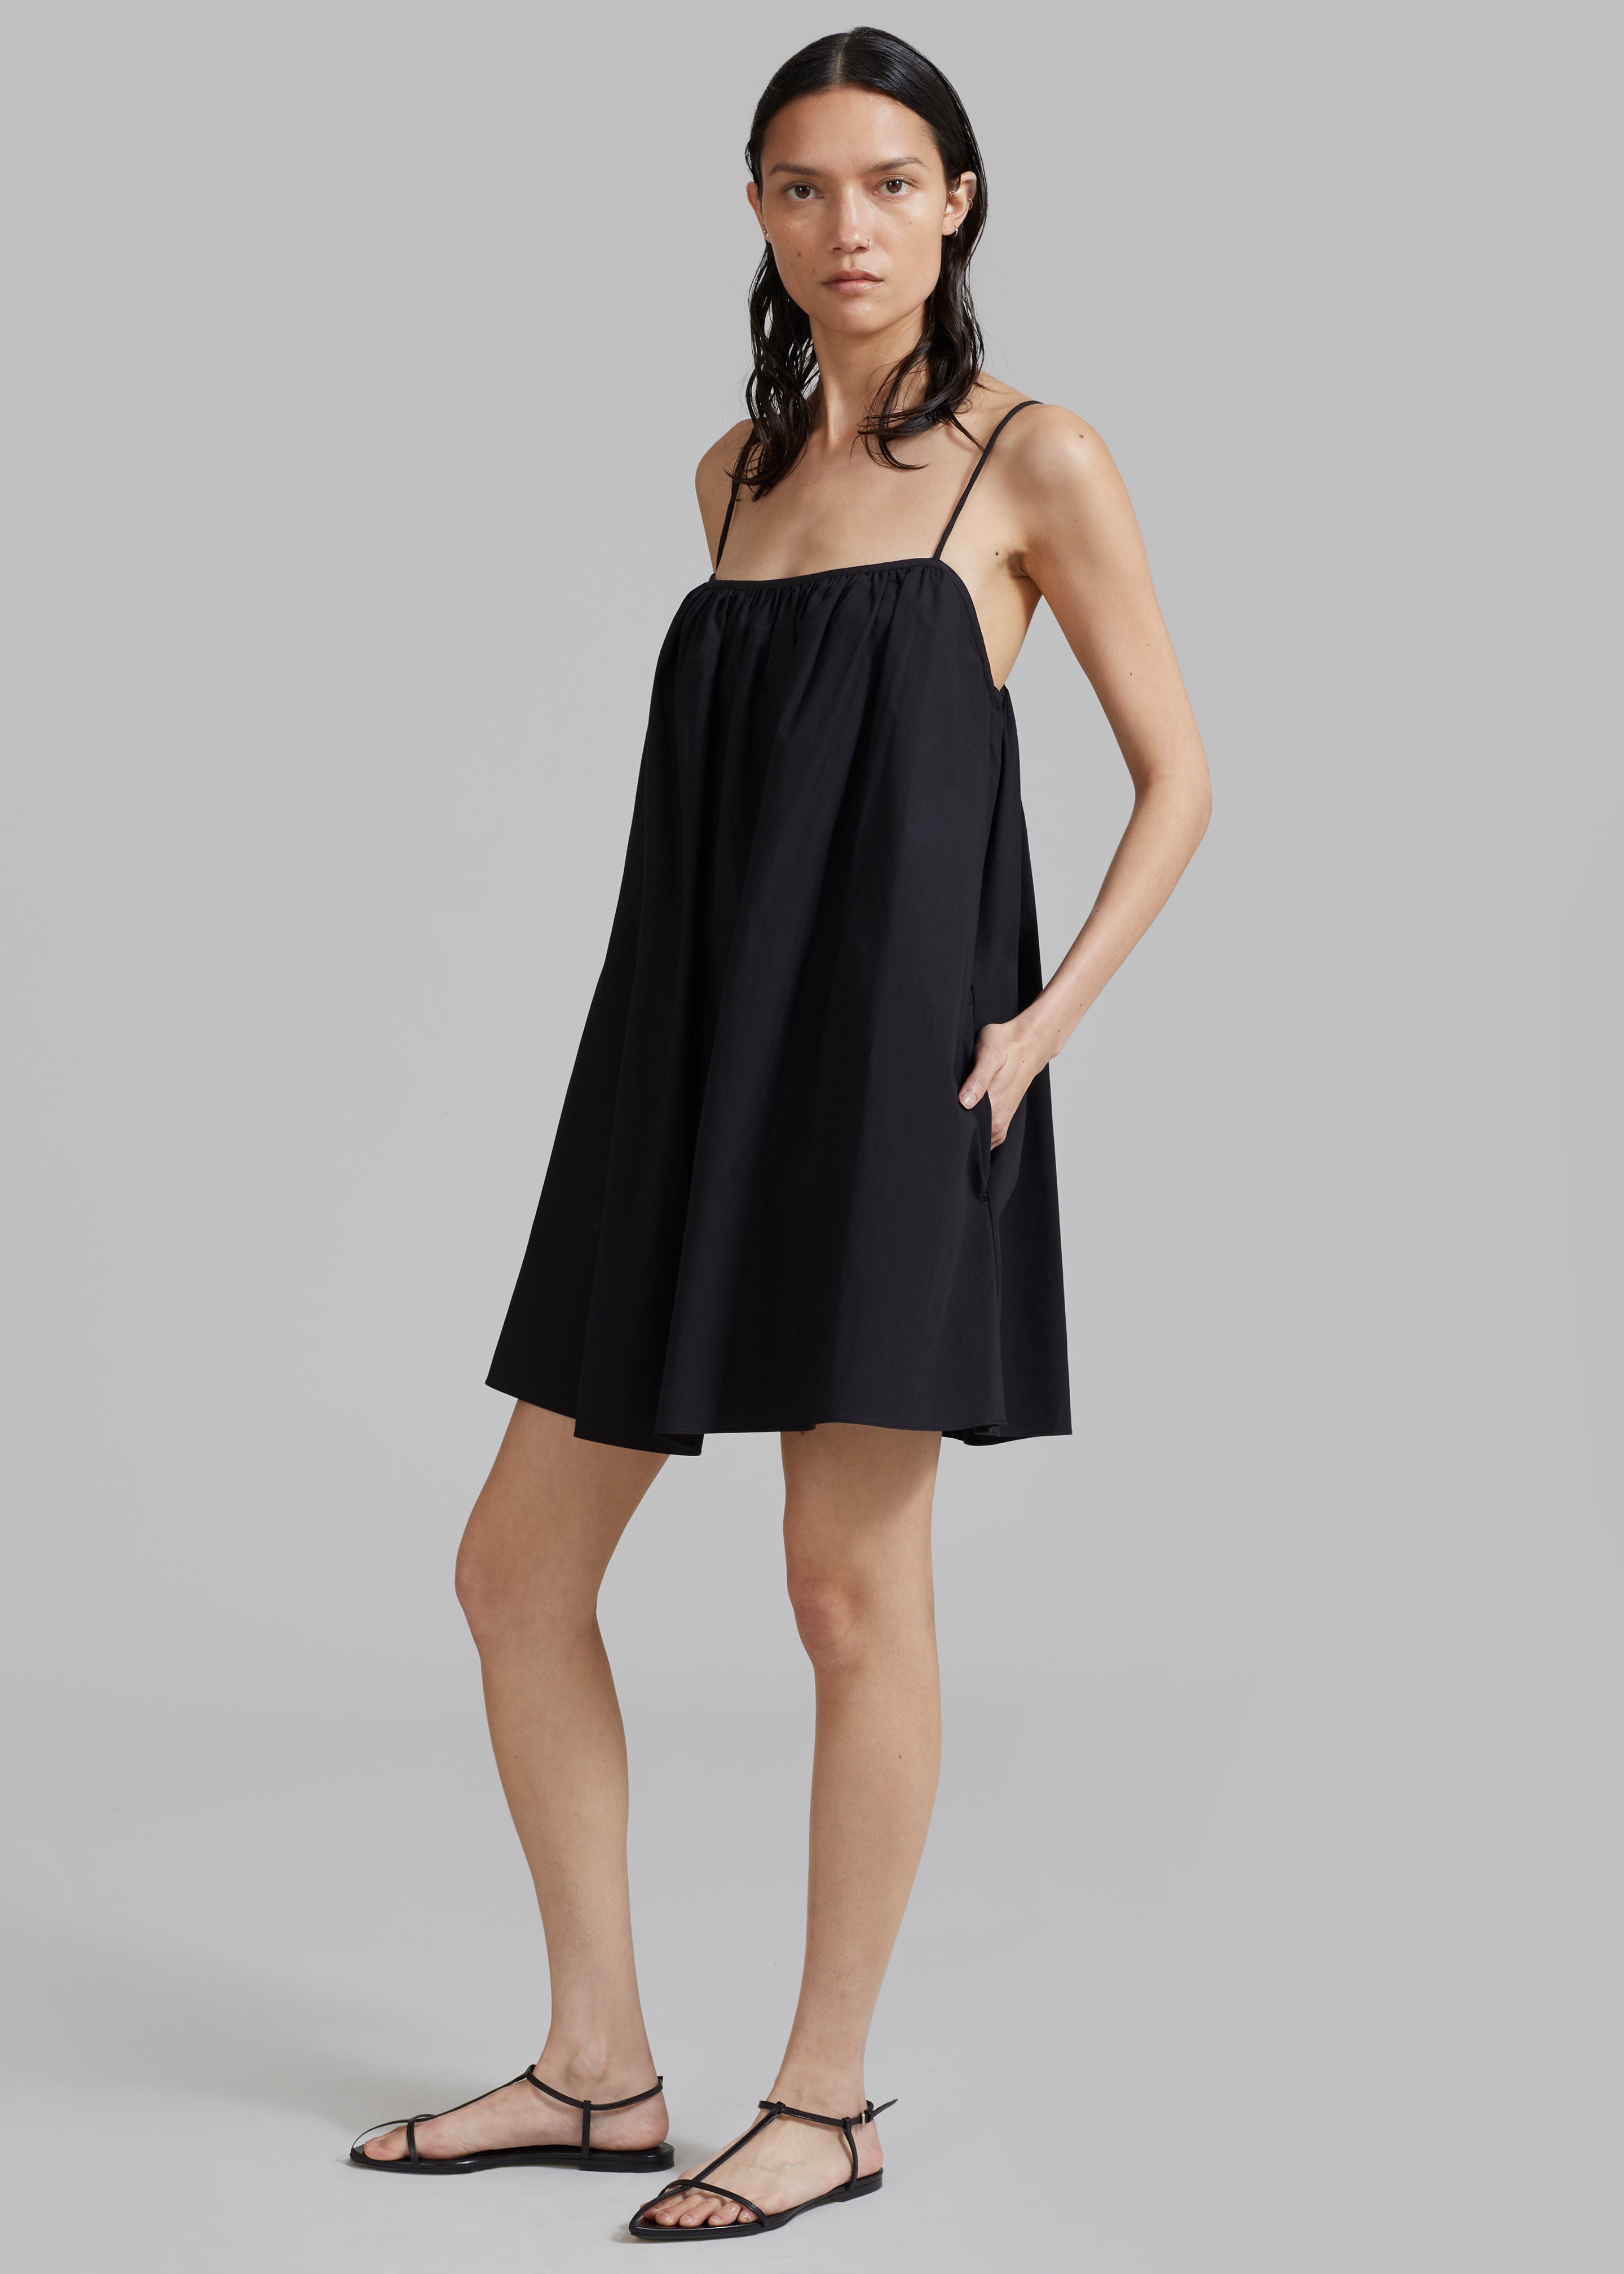 Matteau Voluminous Cami Mini Dress - Black - 4